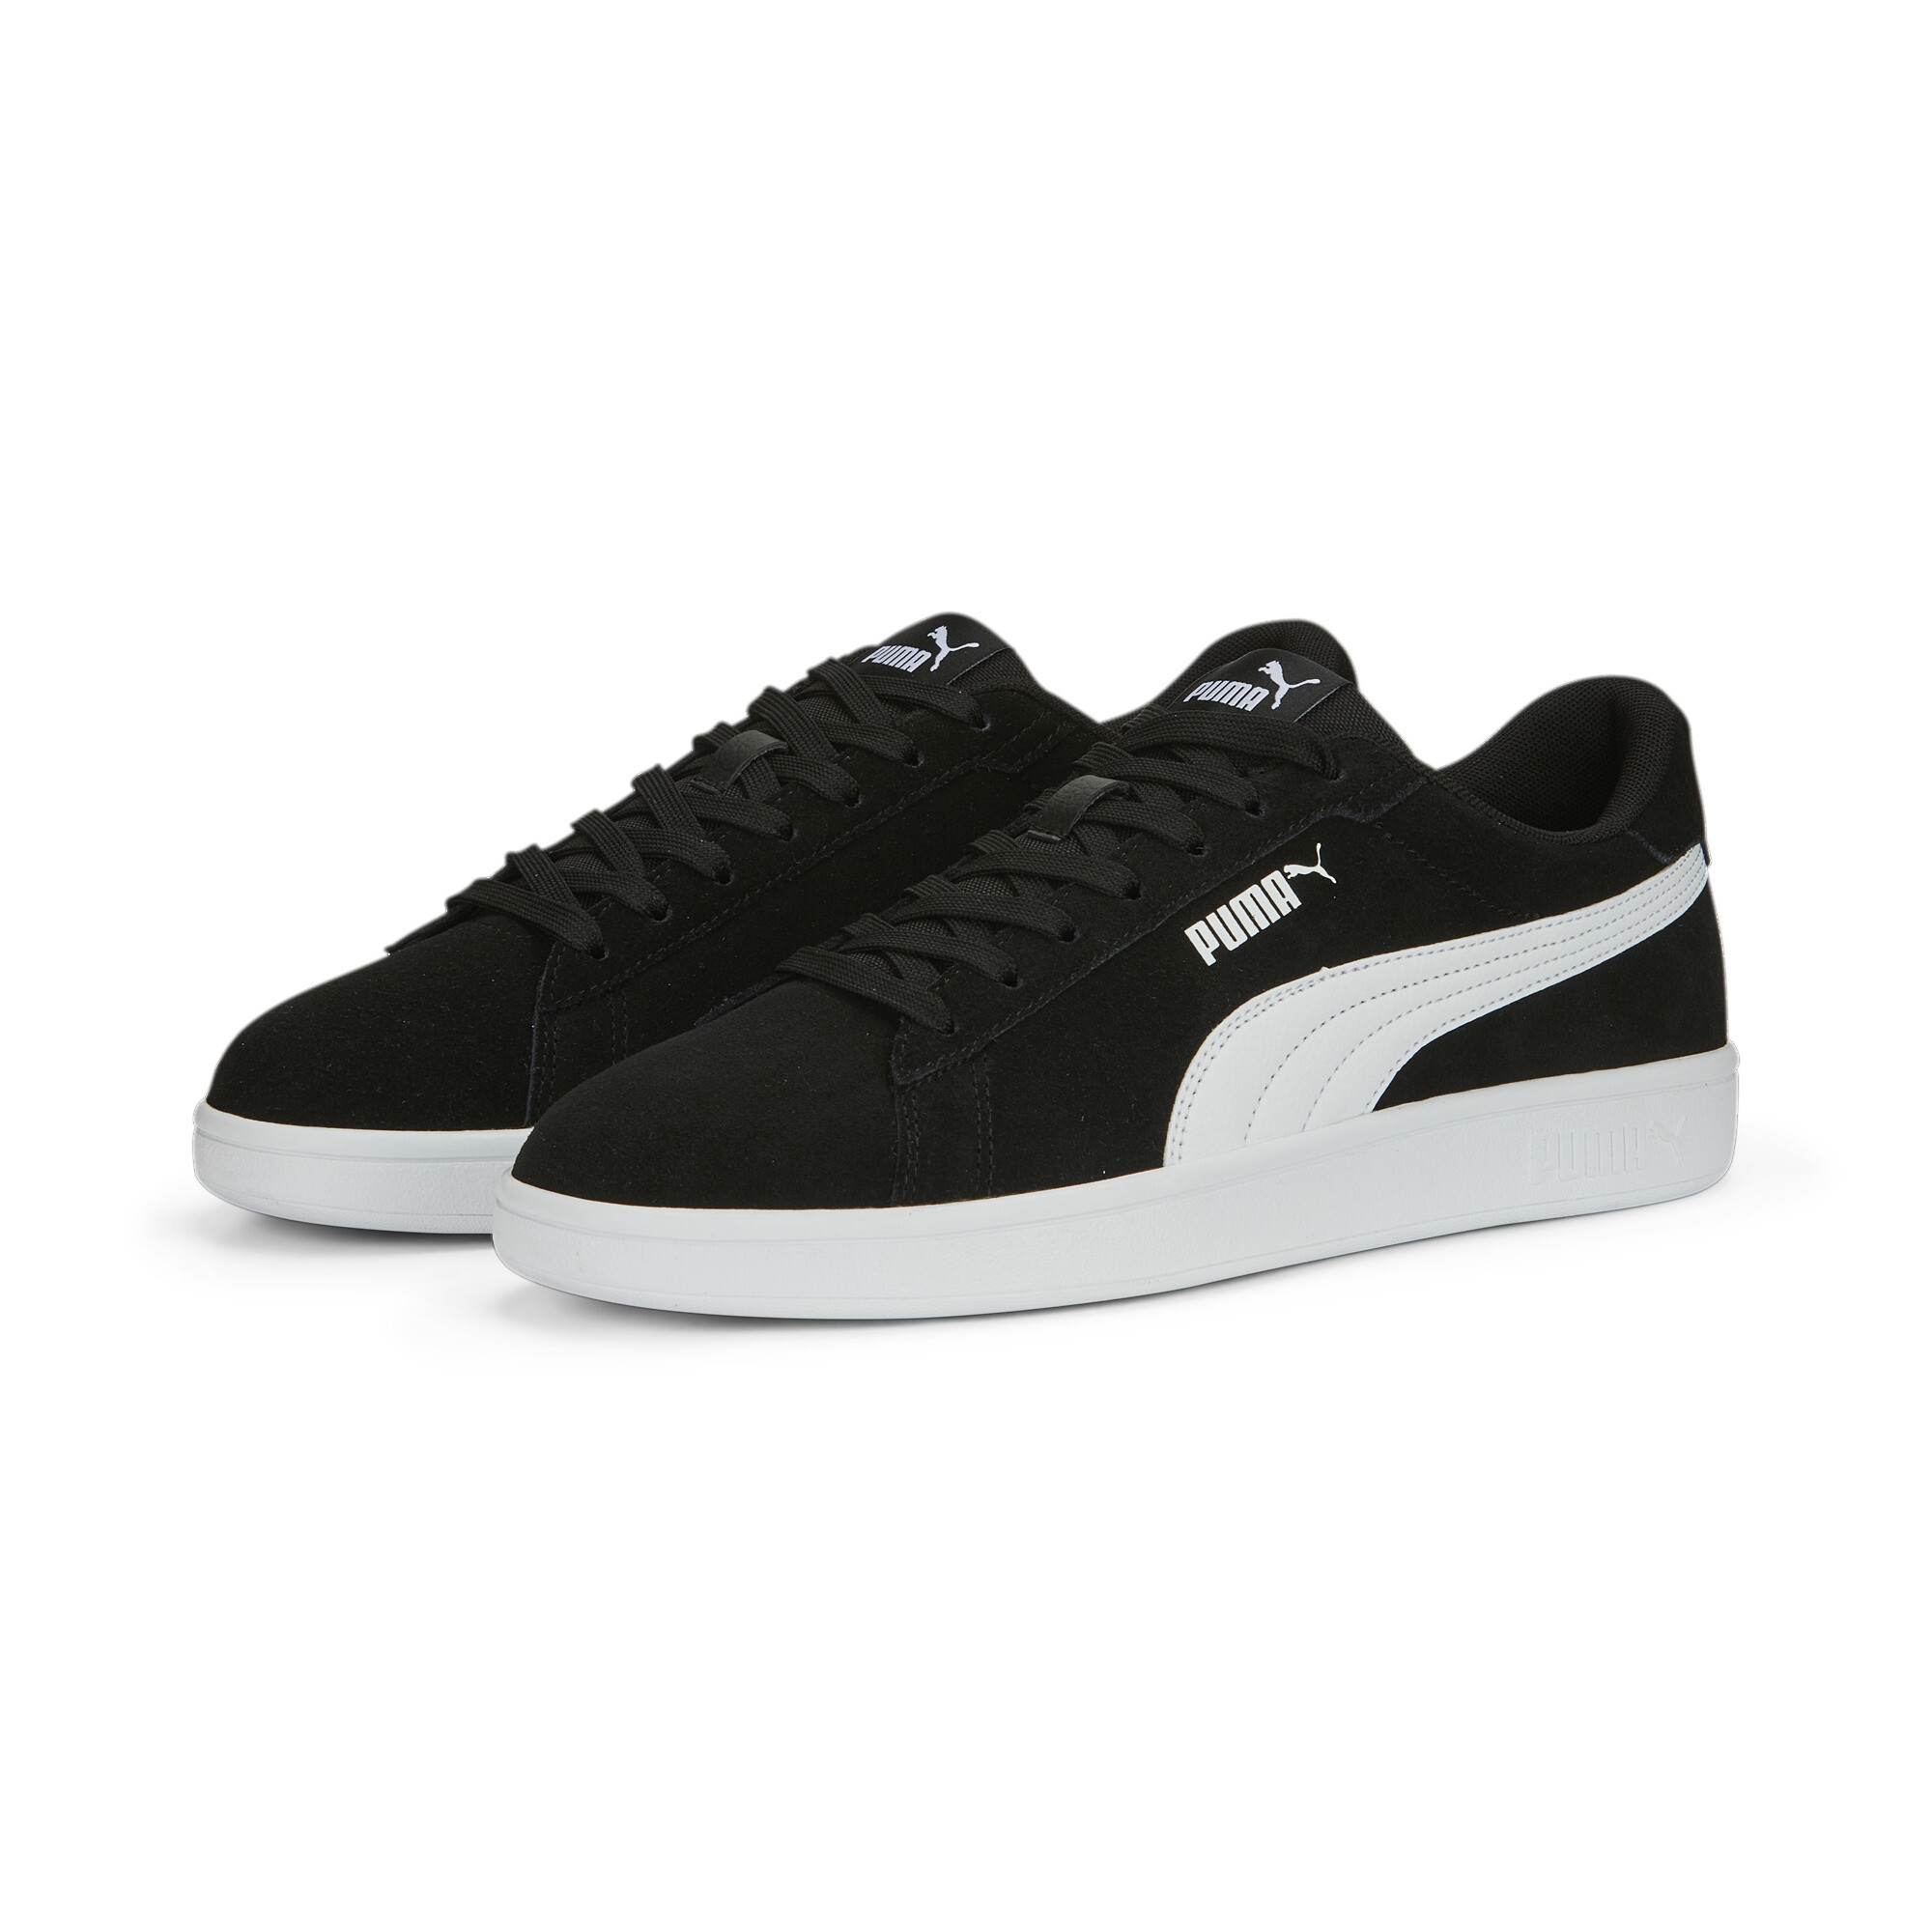 Puma Smash 3.0 Sneakers, Black, Size 38.5, Shoes